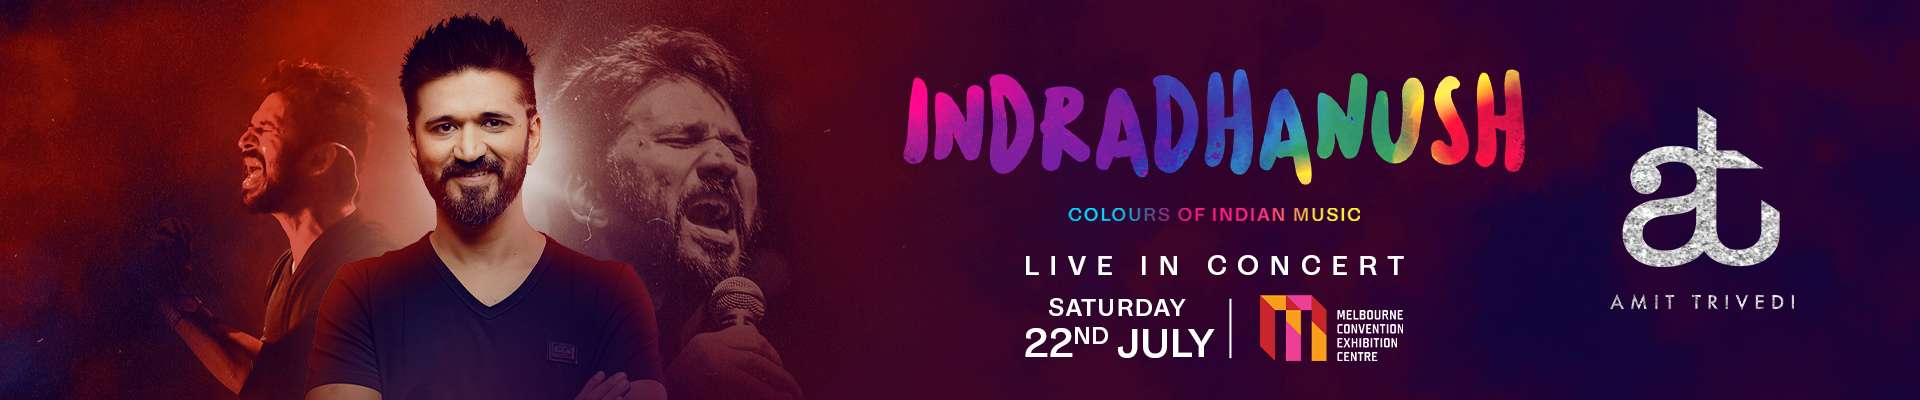 Amit Trivedi's INDRADANUSH - Live In Concert Melbourne